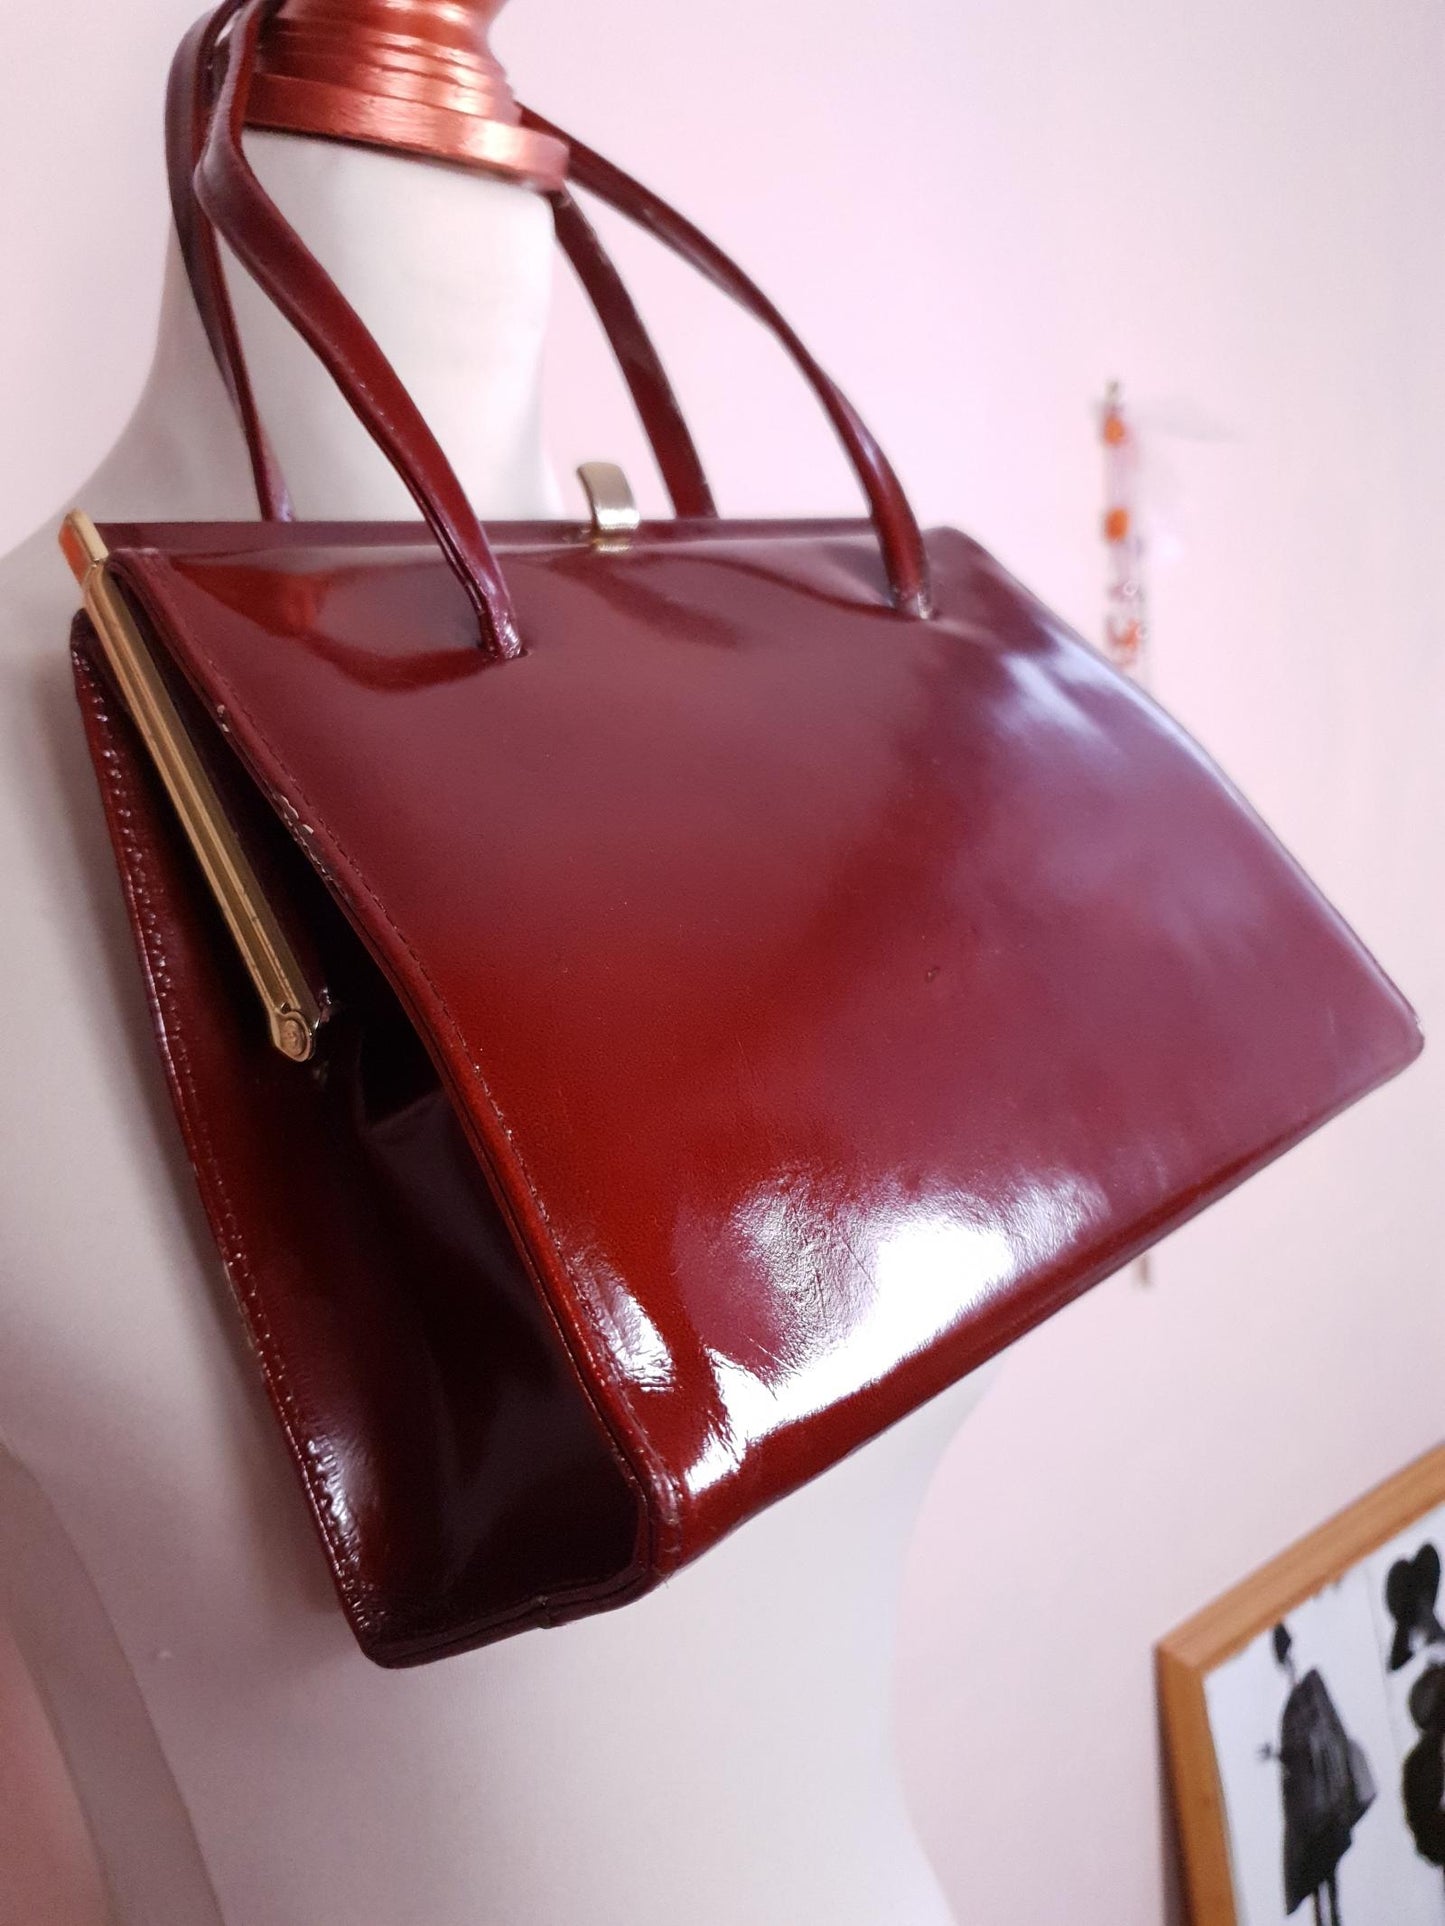 Divine 1950s Vintage Glossy Chestnut Patent Leather Handbag